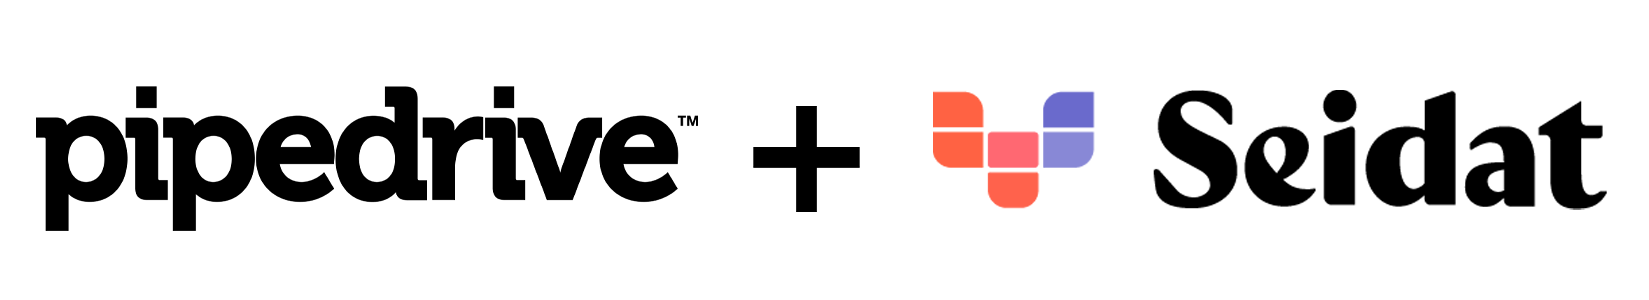 Seidat & Pipedrive logos